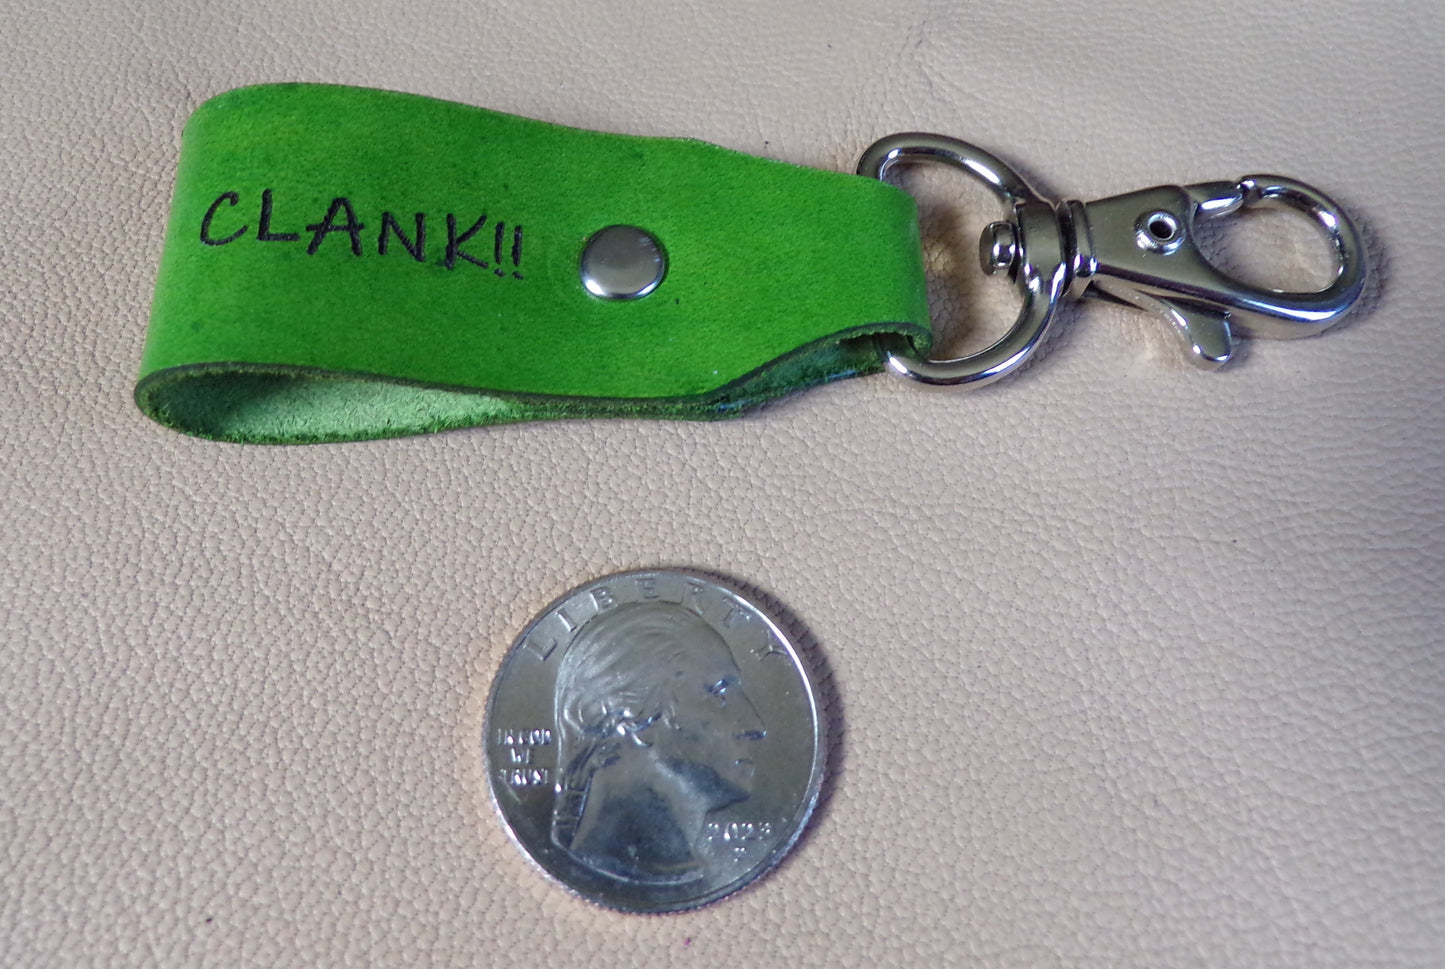 Styx Belt Keychain Clank!! Green leather